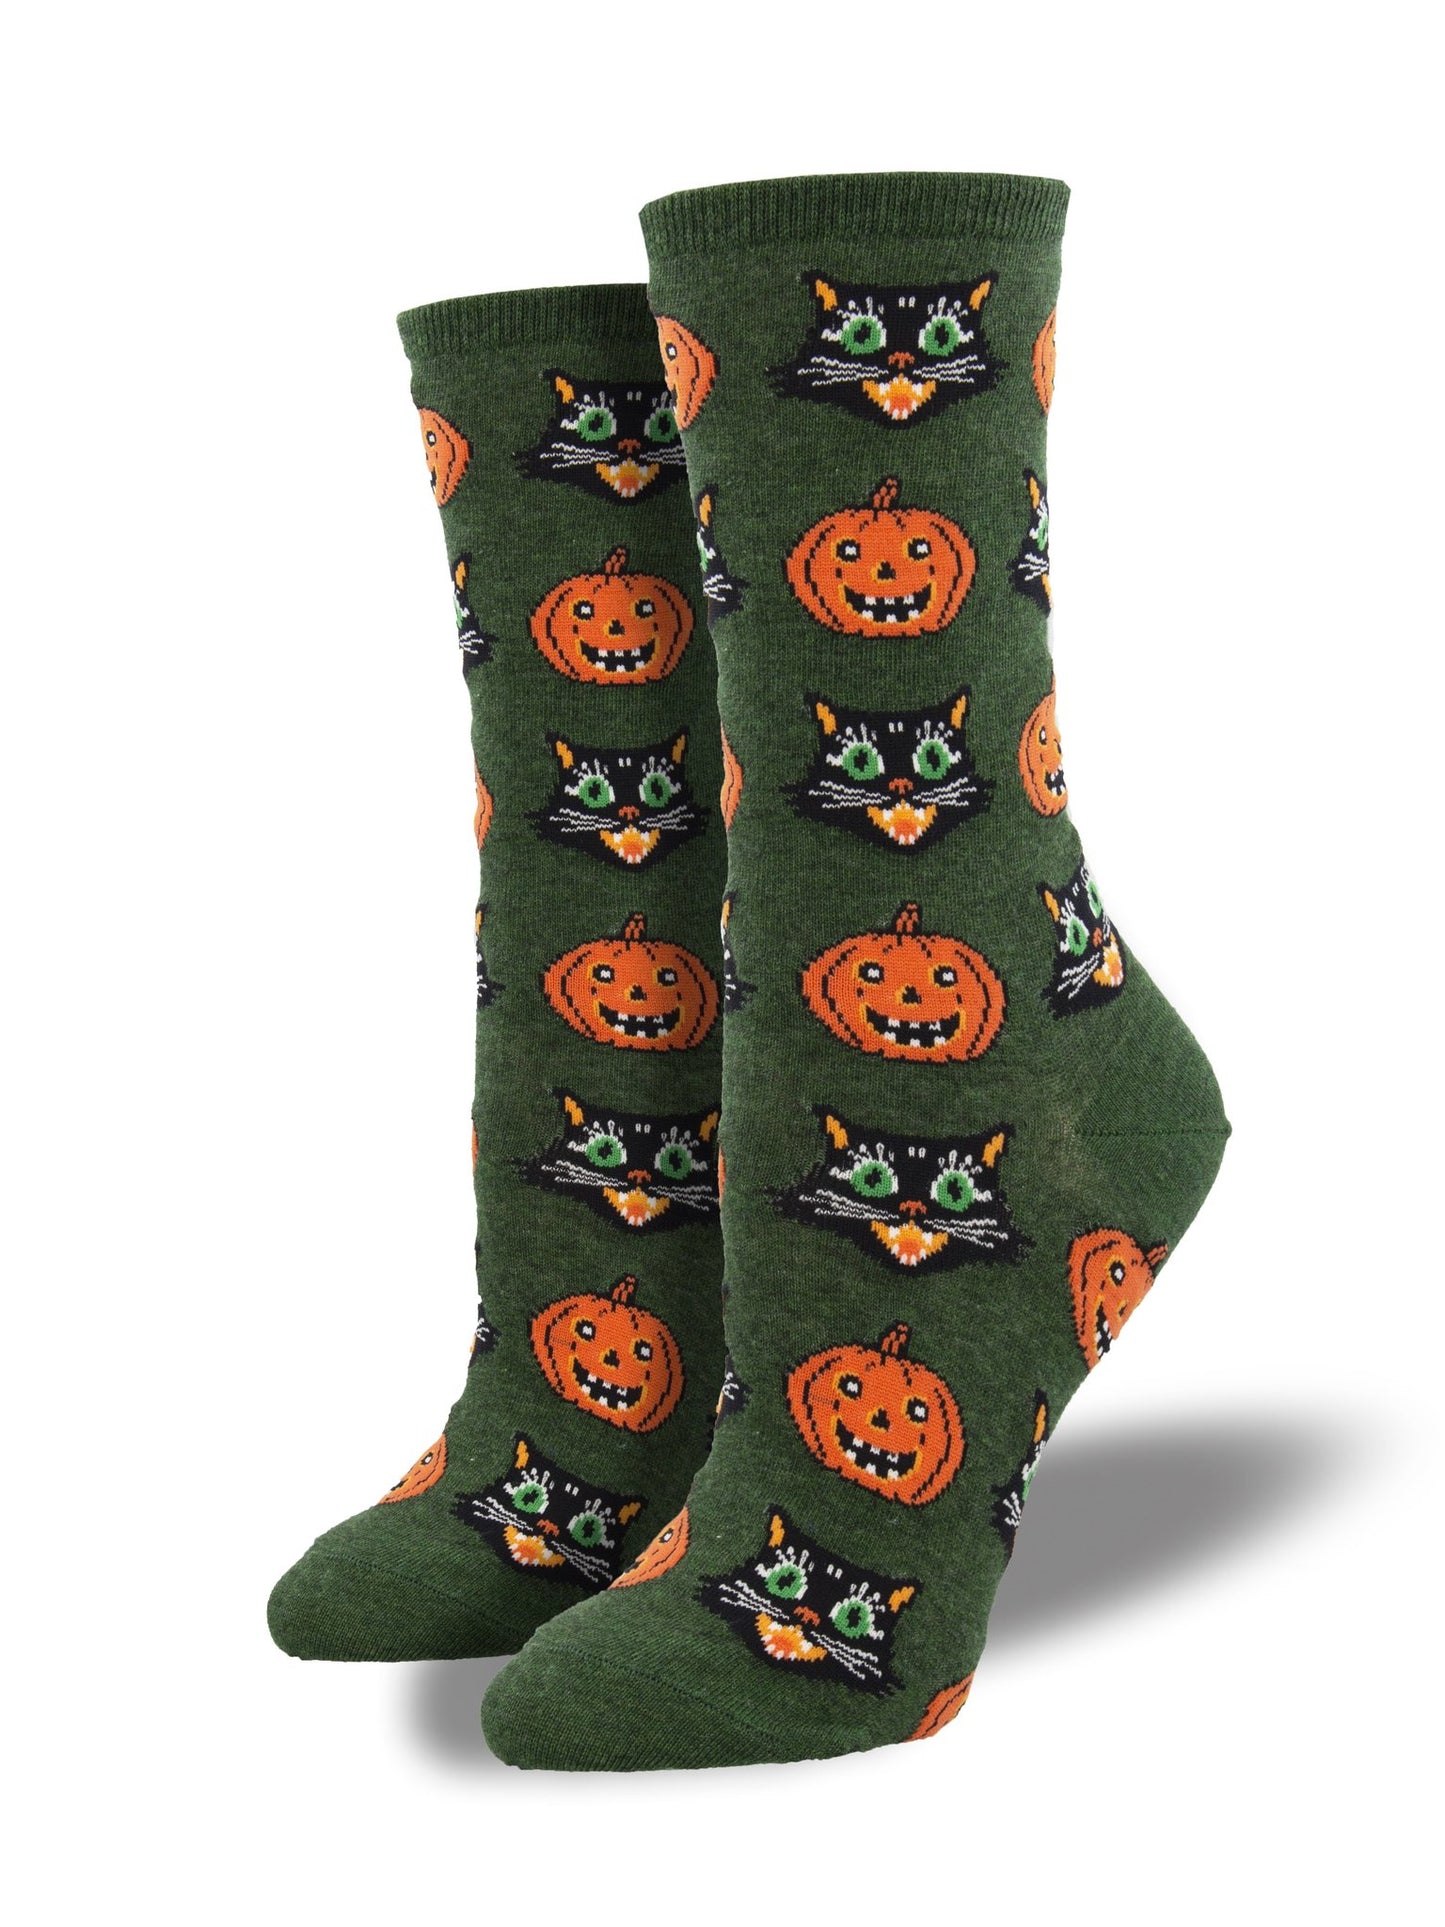 Vintage Halloween women's socks